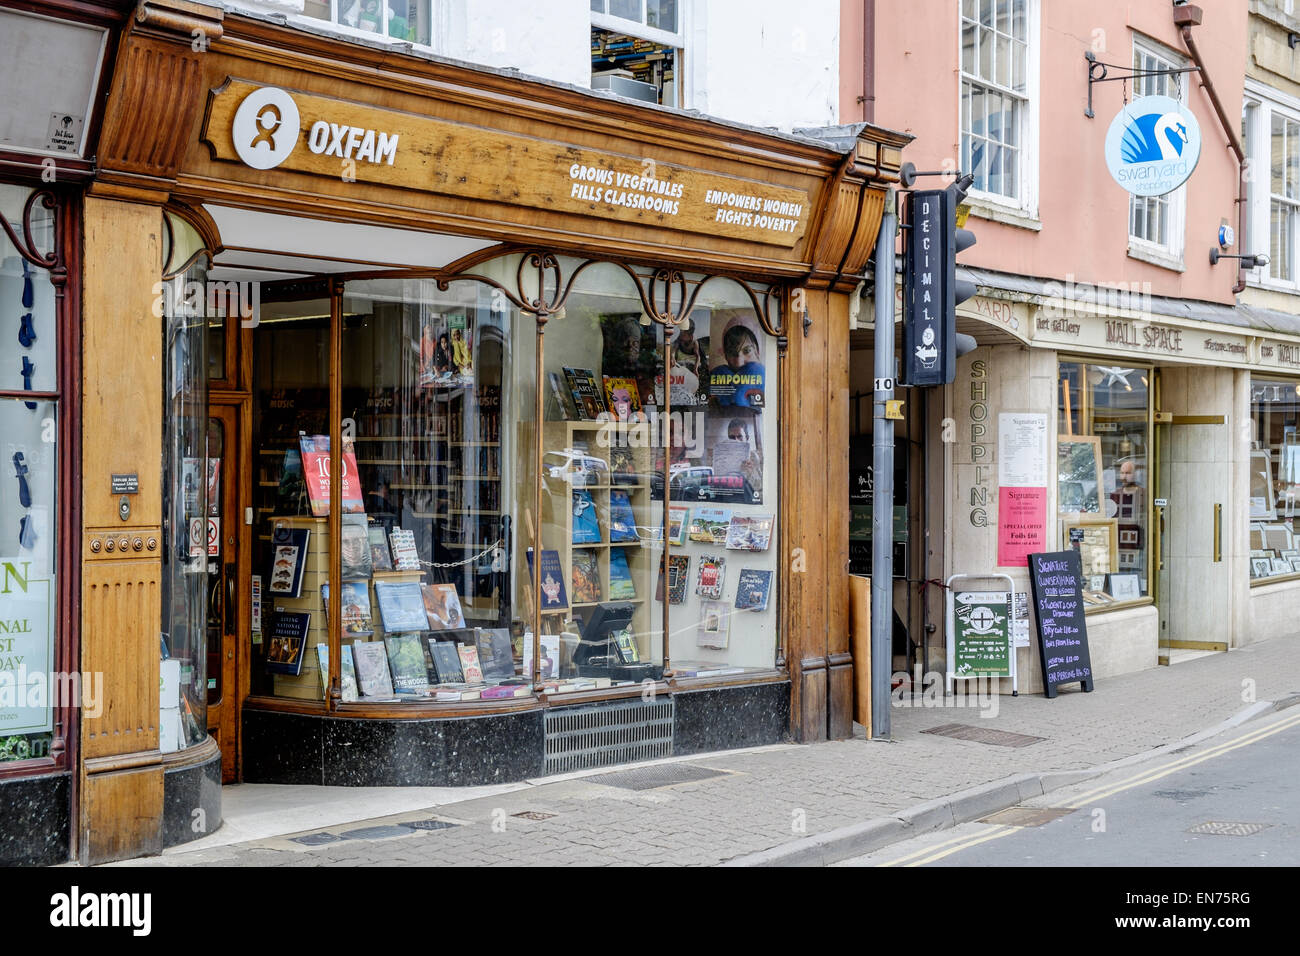 Die vorderen äußeren Schaufenster Shops Oxfam shop ein Charity-Geschäft in Cirencester, Gloucestershire, UK. Stockfoto